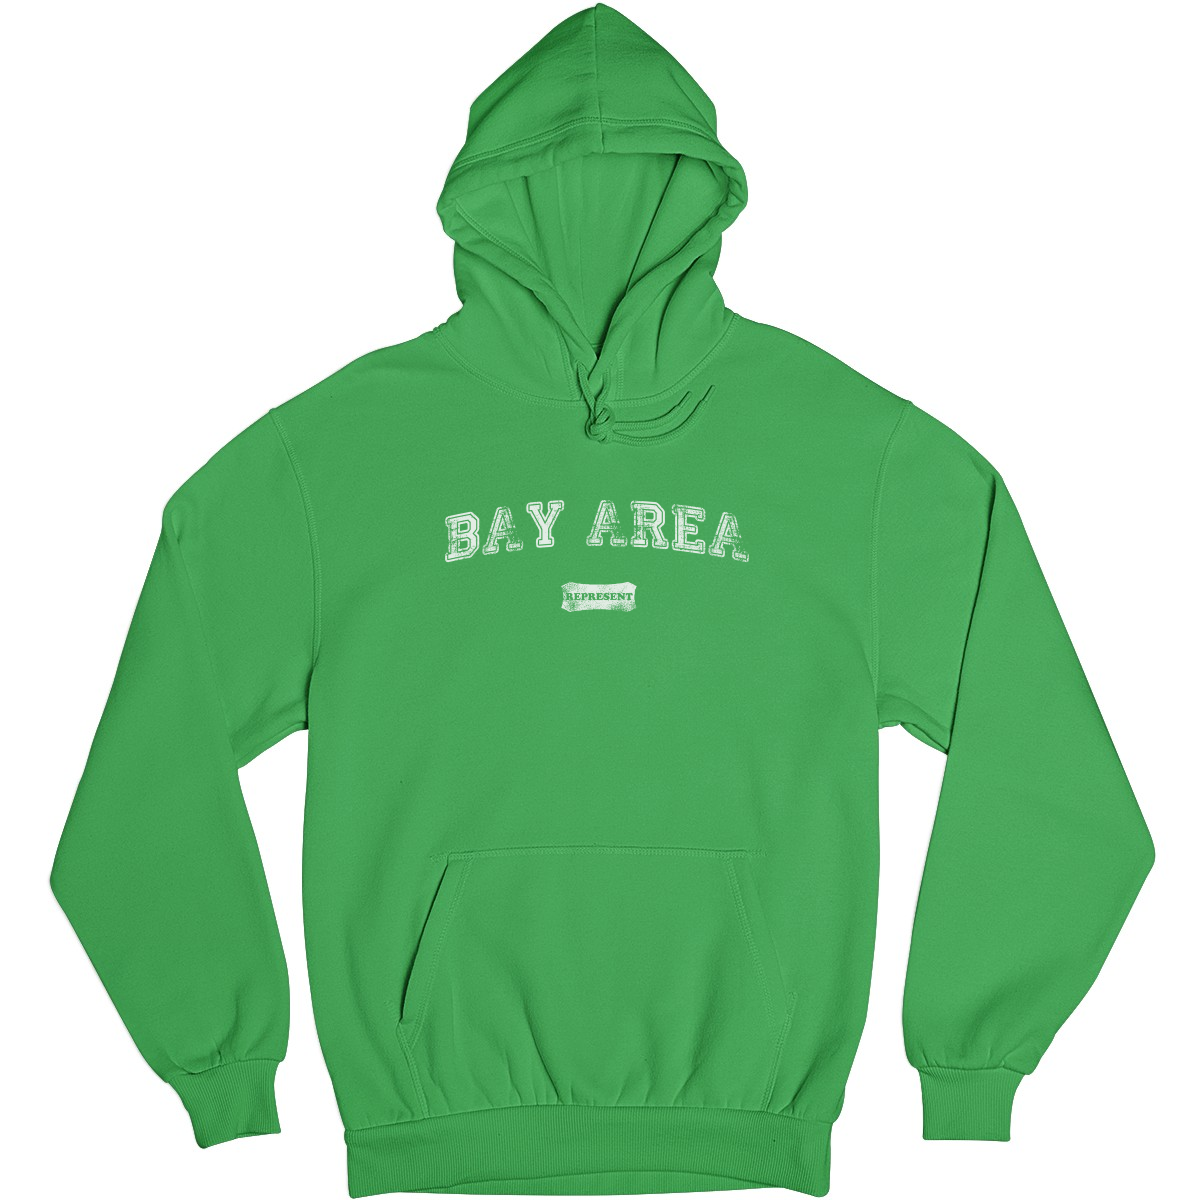 Bay Area Represent Unisex Hoodie | Green